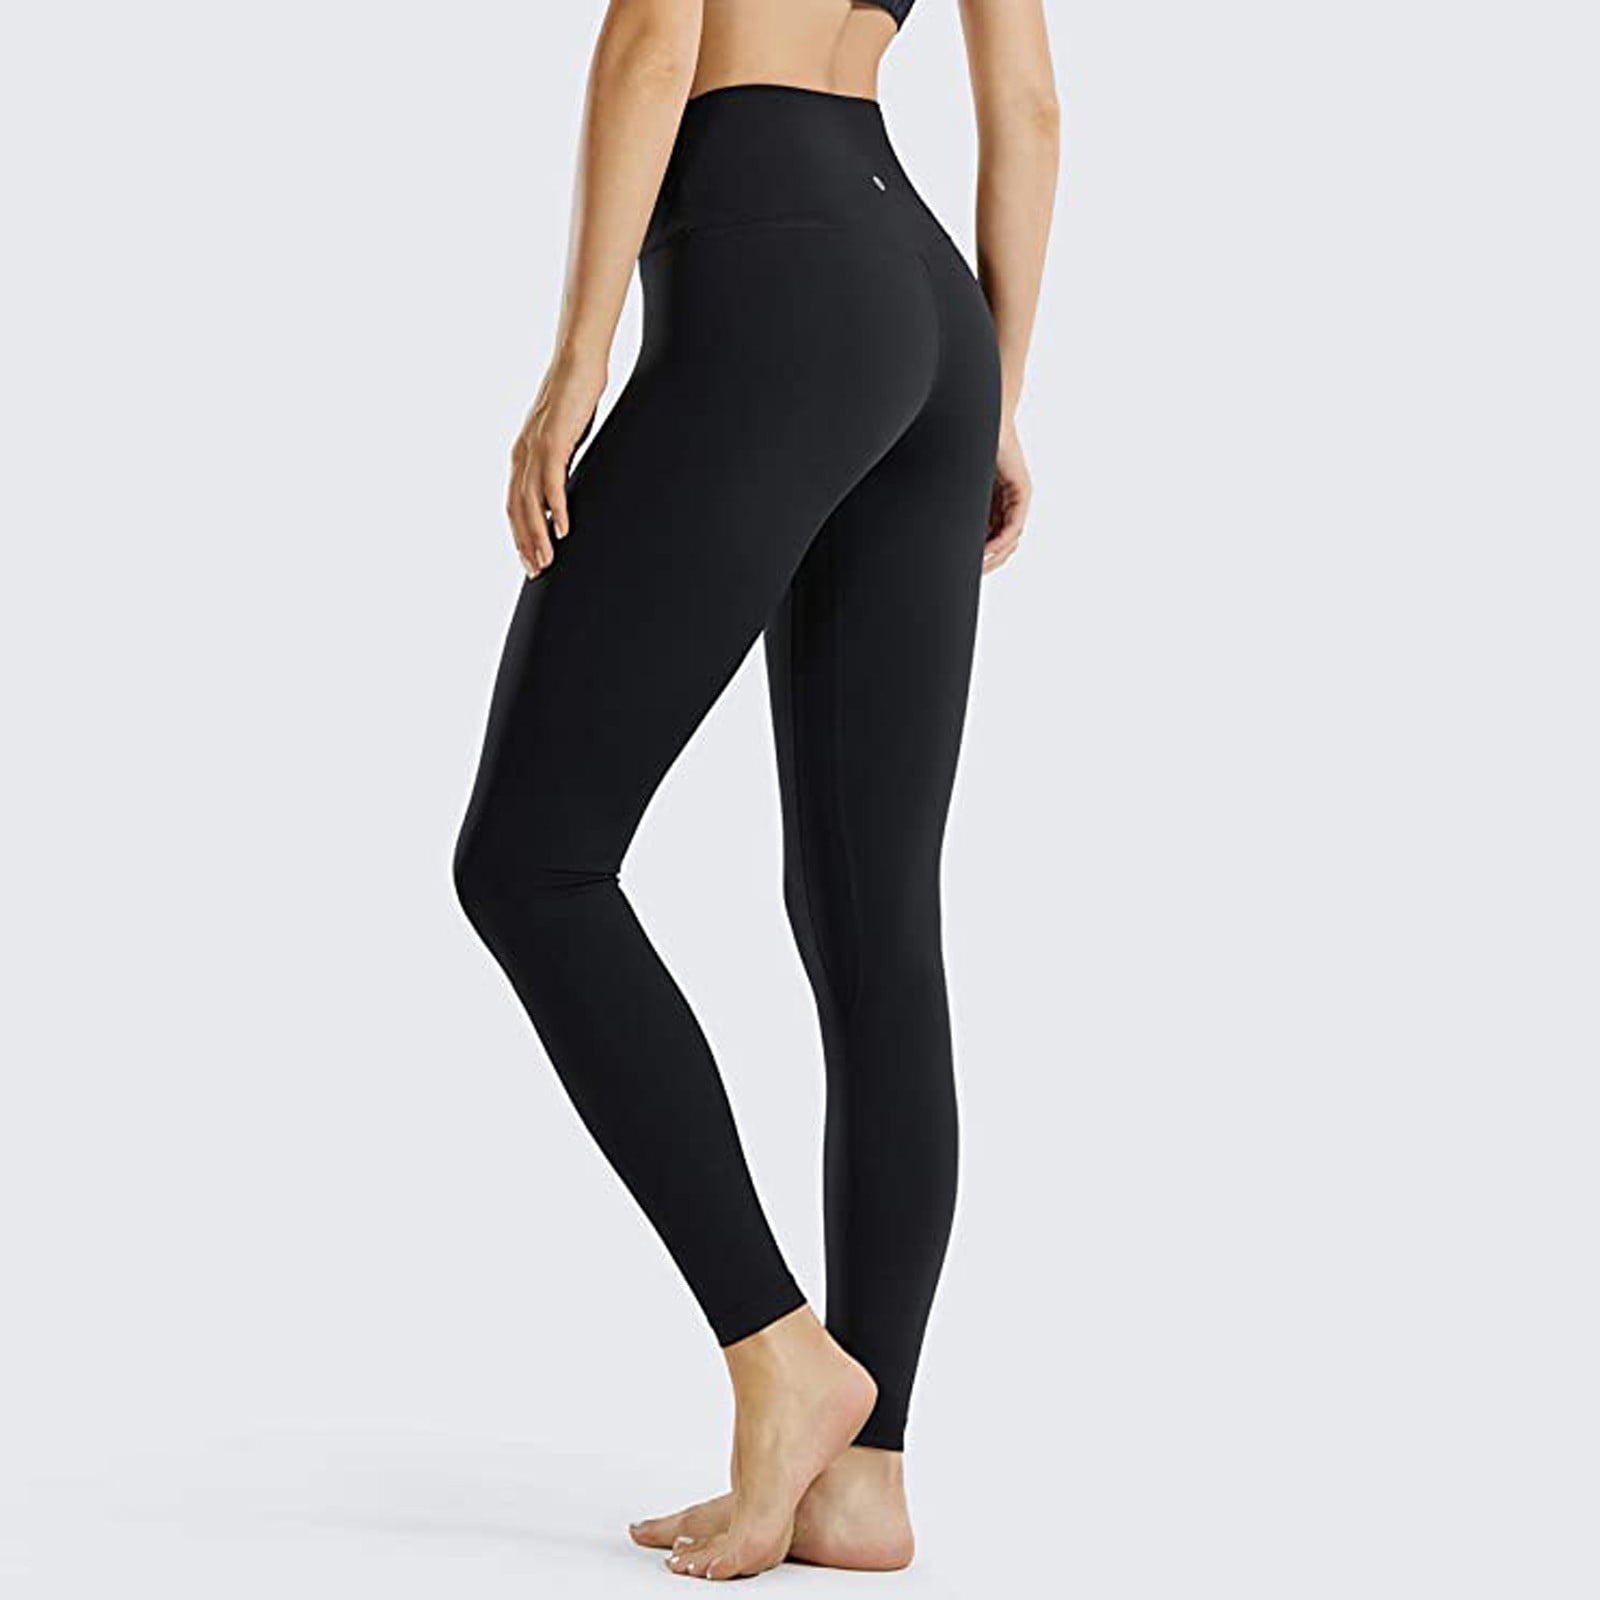 band Kreek Plunderen Gubotare Leggings For Women Women's Bootcut Yoga Pants Bootleg Dress Pants  Regular/Tall with Inner Pocket,Black XL - Walmart.com